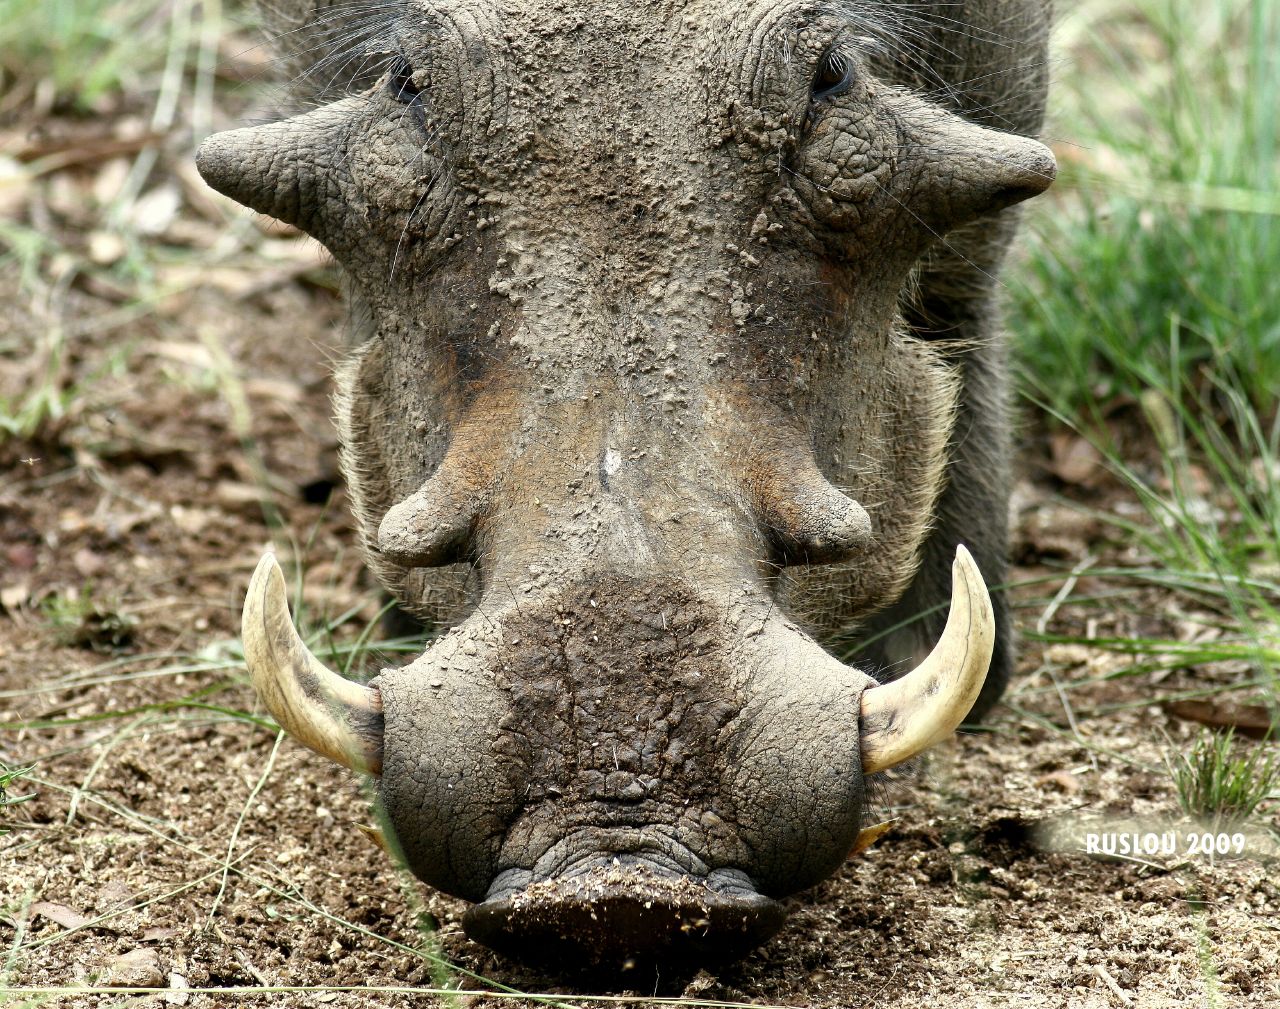 Warthog grazing, nempo hareupeun muzzle nu